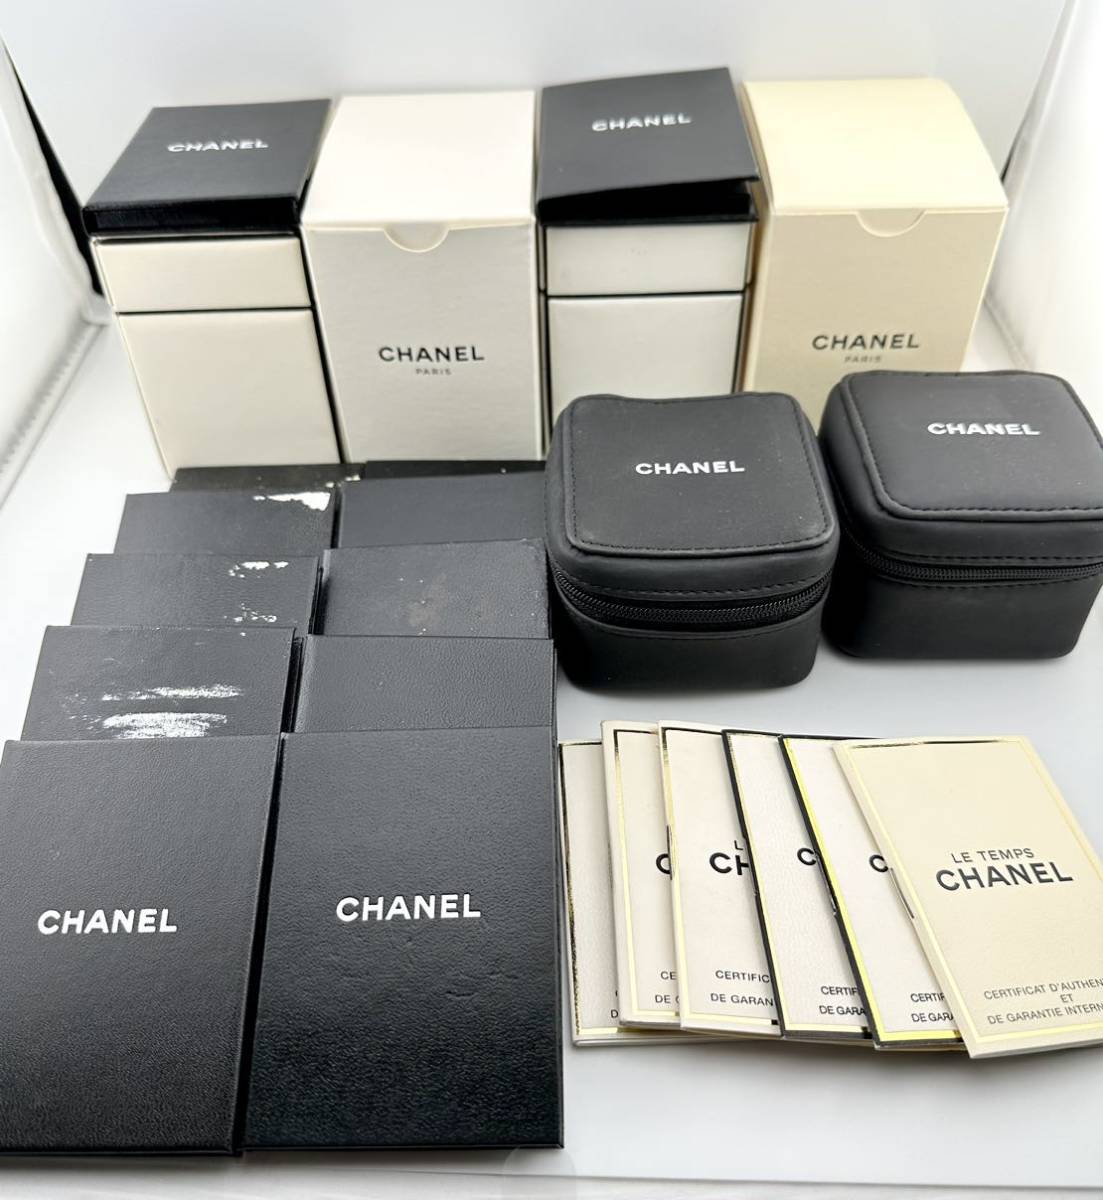 Chanel box.